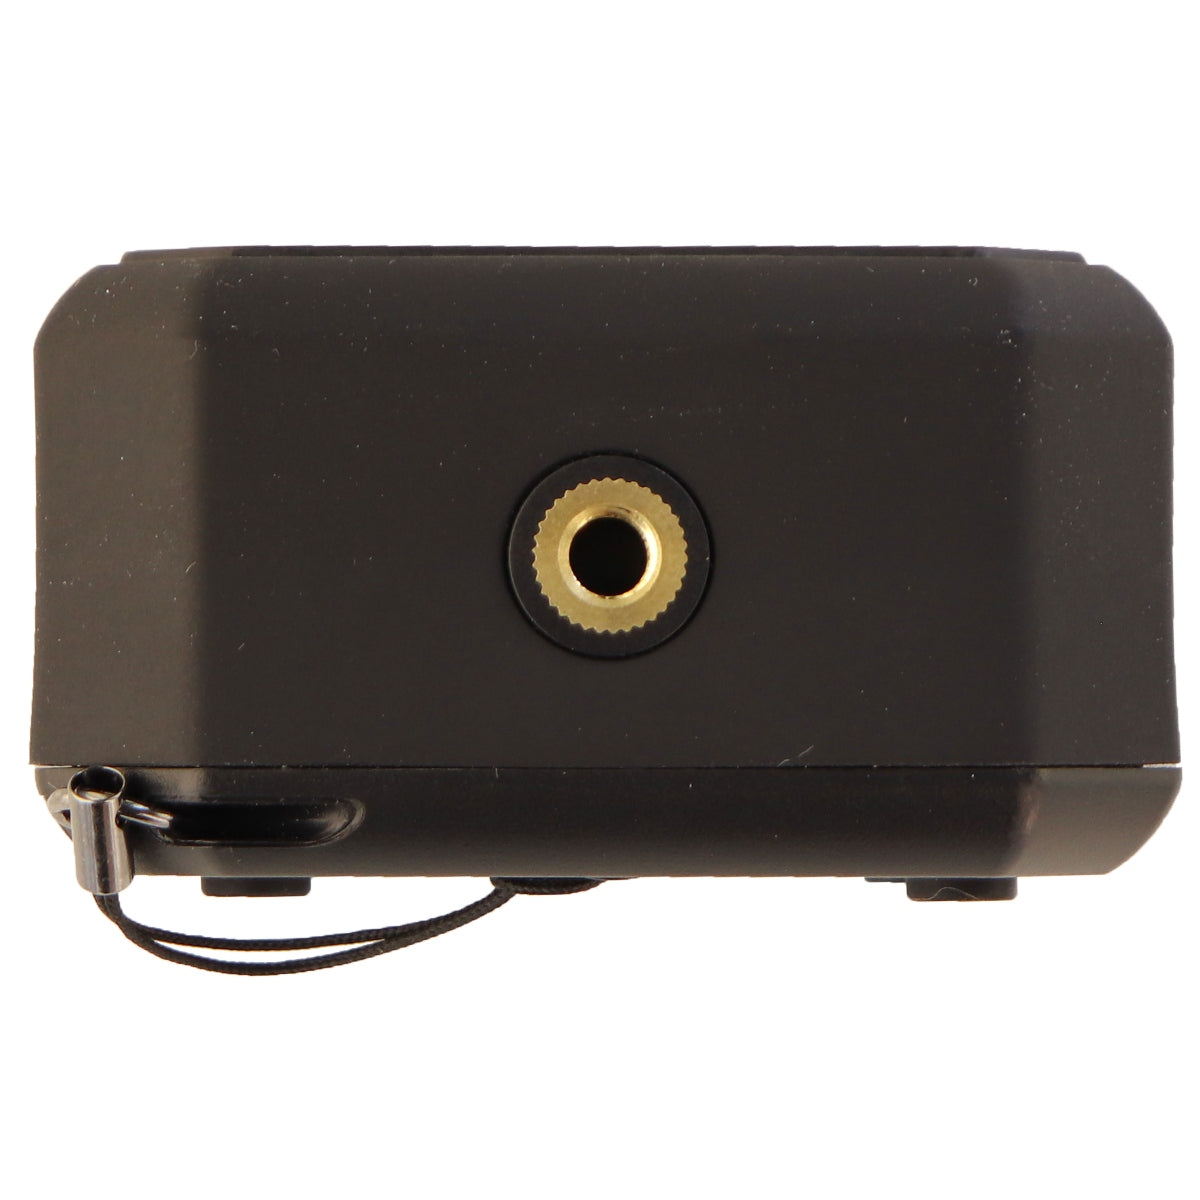 ECOXGEAR EcoPebble Lite Bluetooth Waterproof Rechargeable Speaker - Black Cell Phone - Audio Docks & Speakers ECOXGEAR    - Simple Cell Bulk Wholesale Pricing - USA Seller